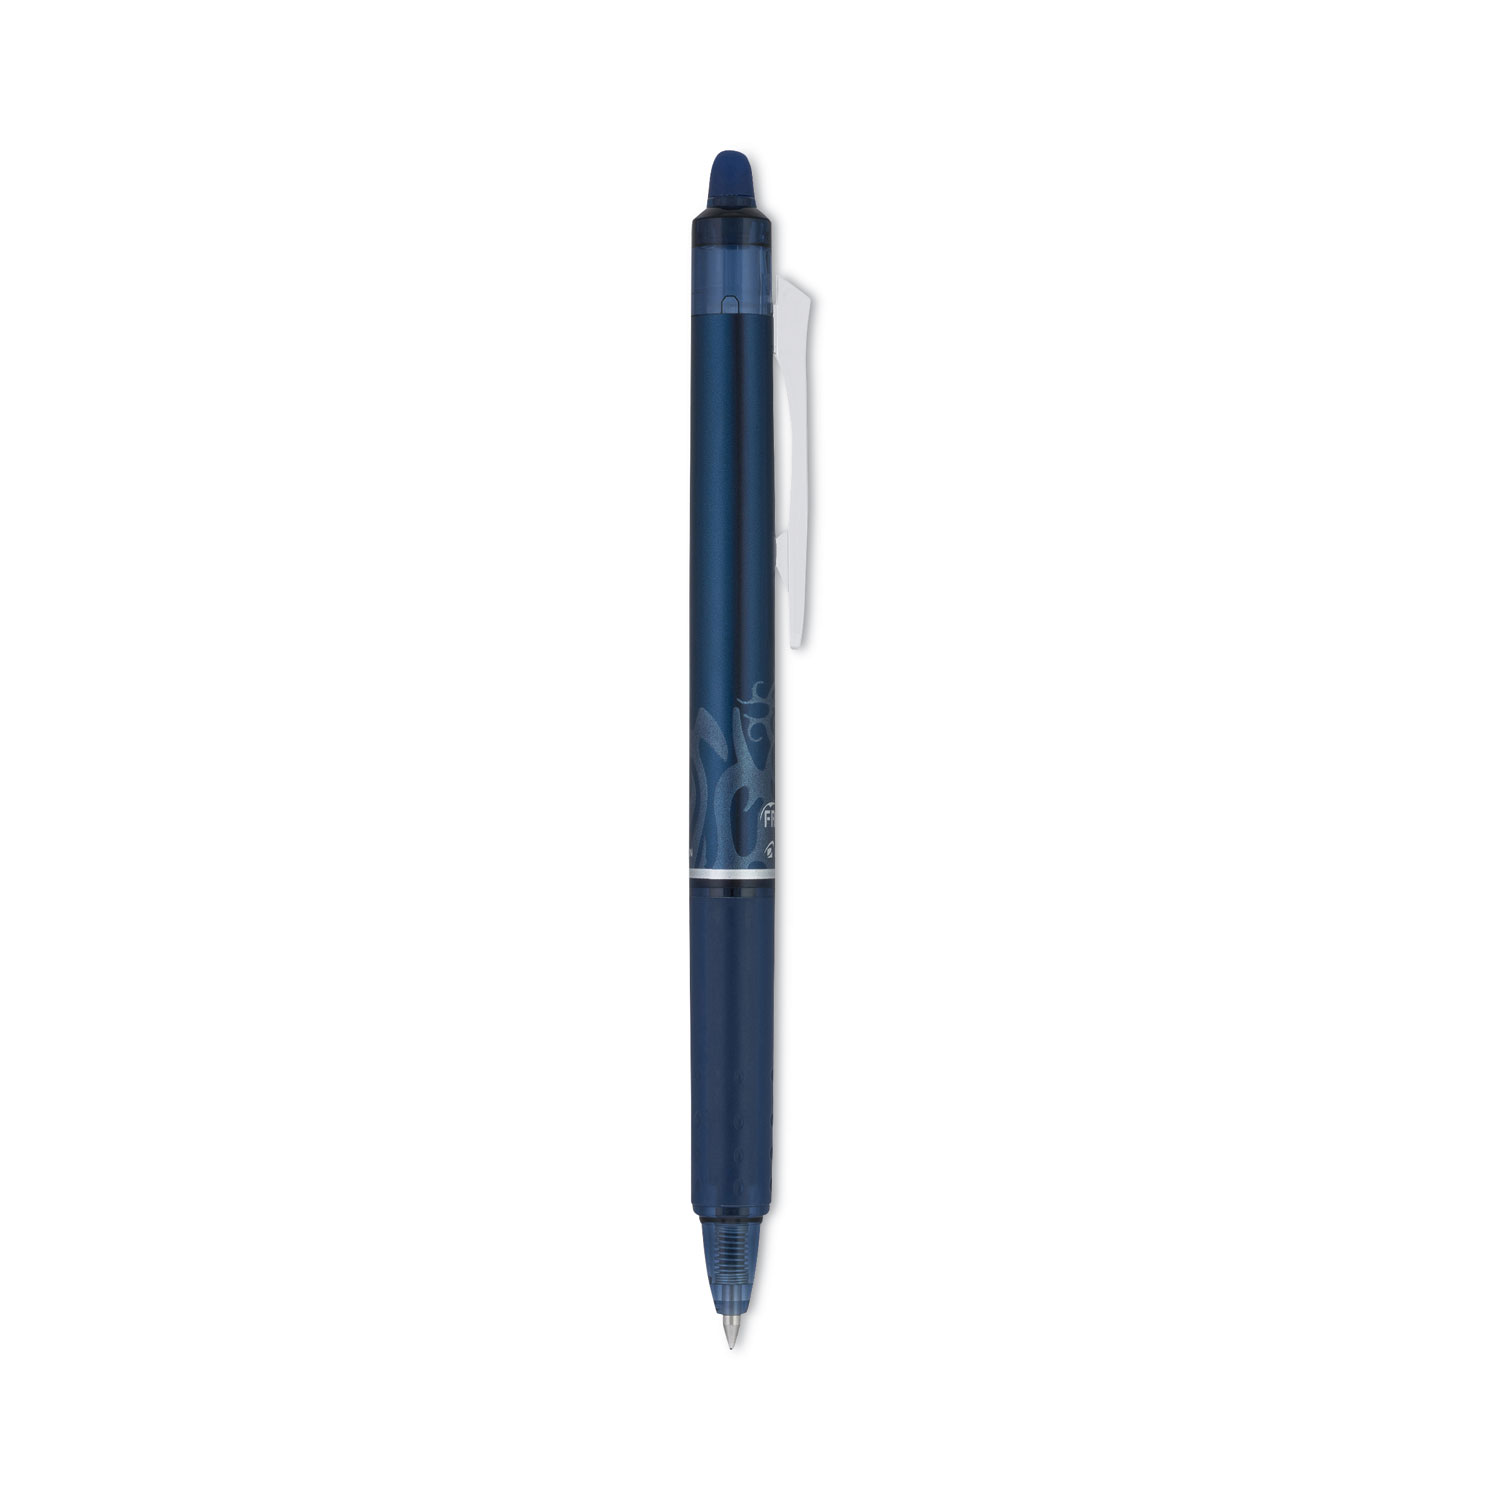 Pilot Frixion Erasable Gel Ink Refill 0.7mm Blue 3 Pack